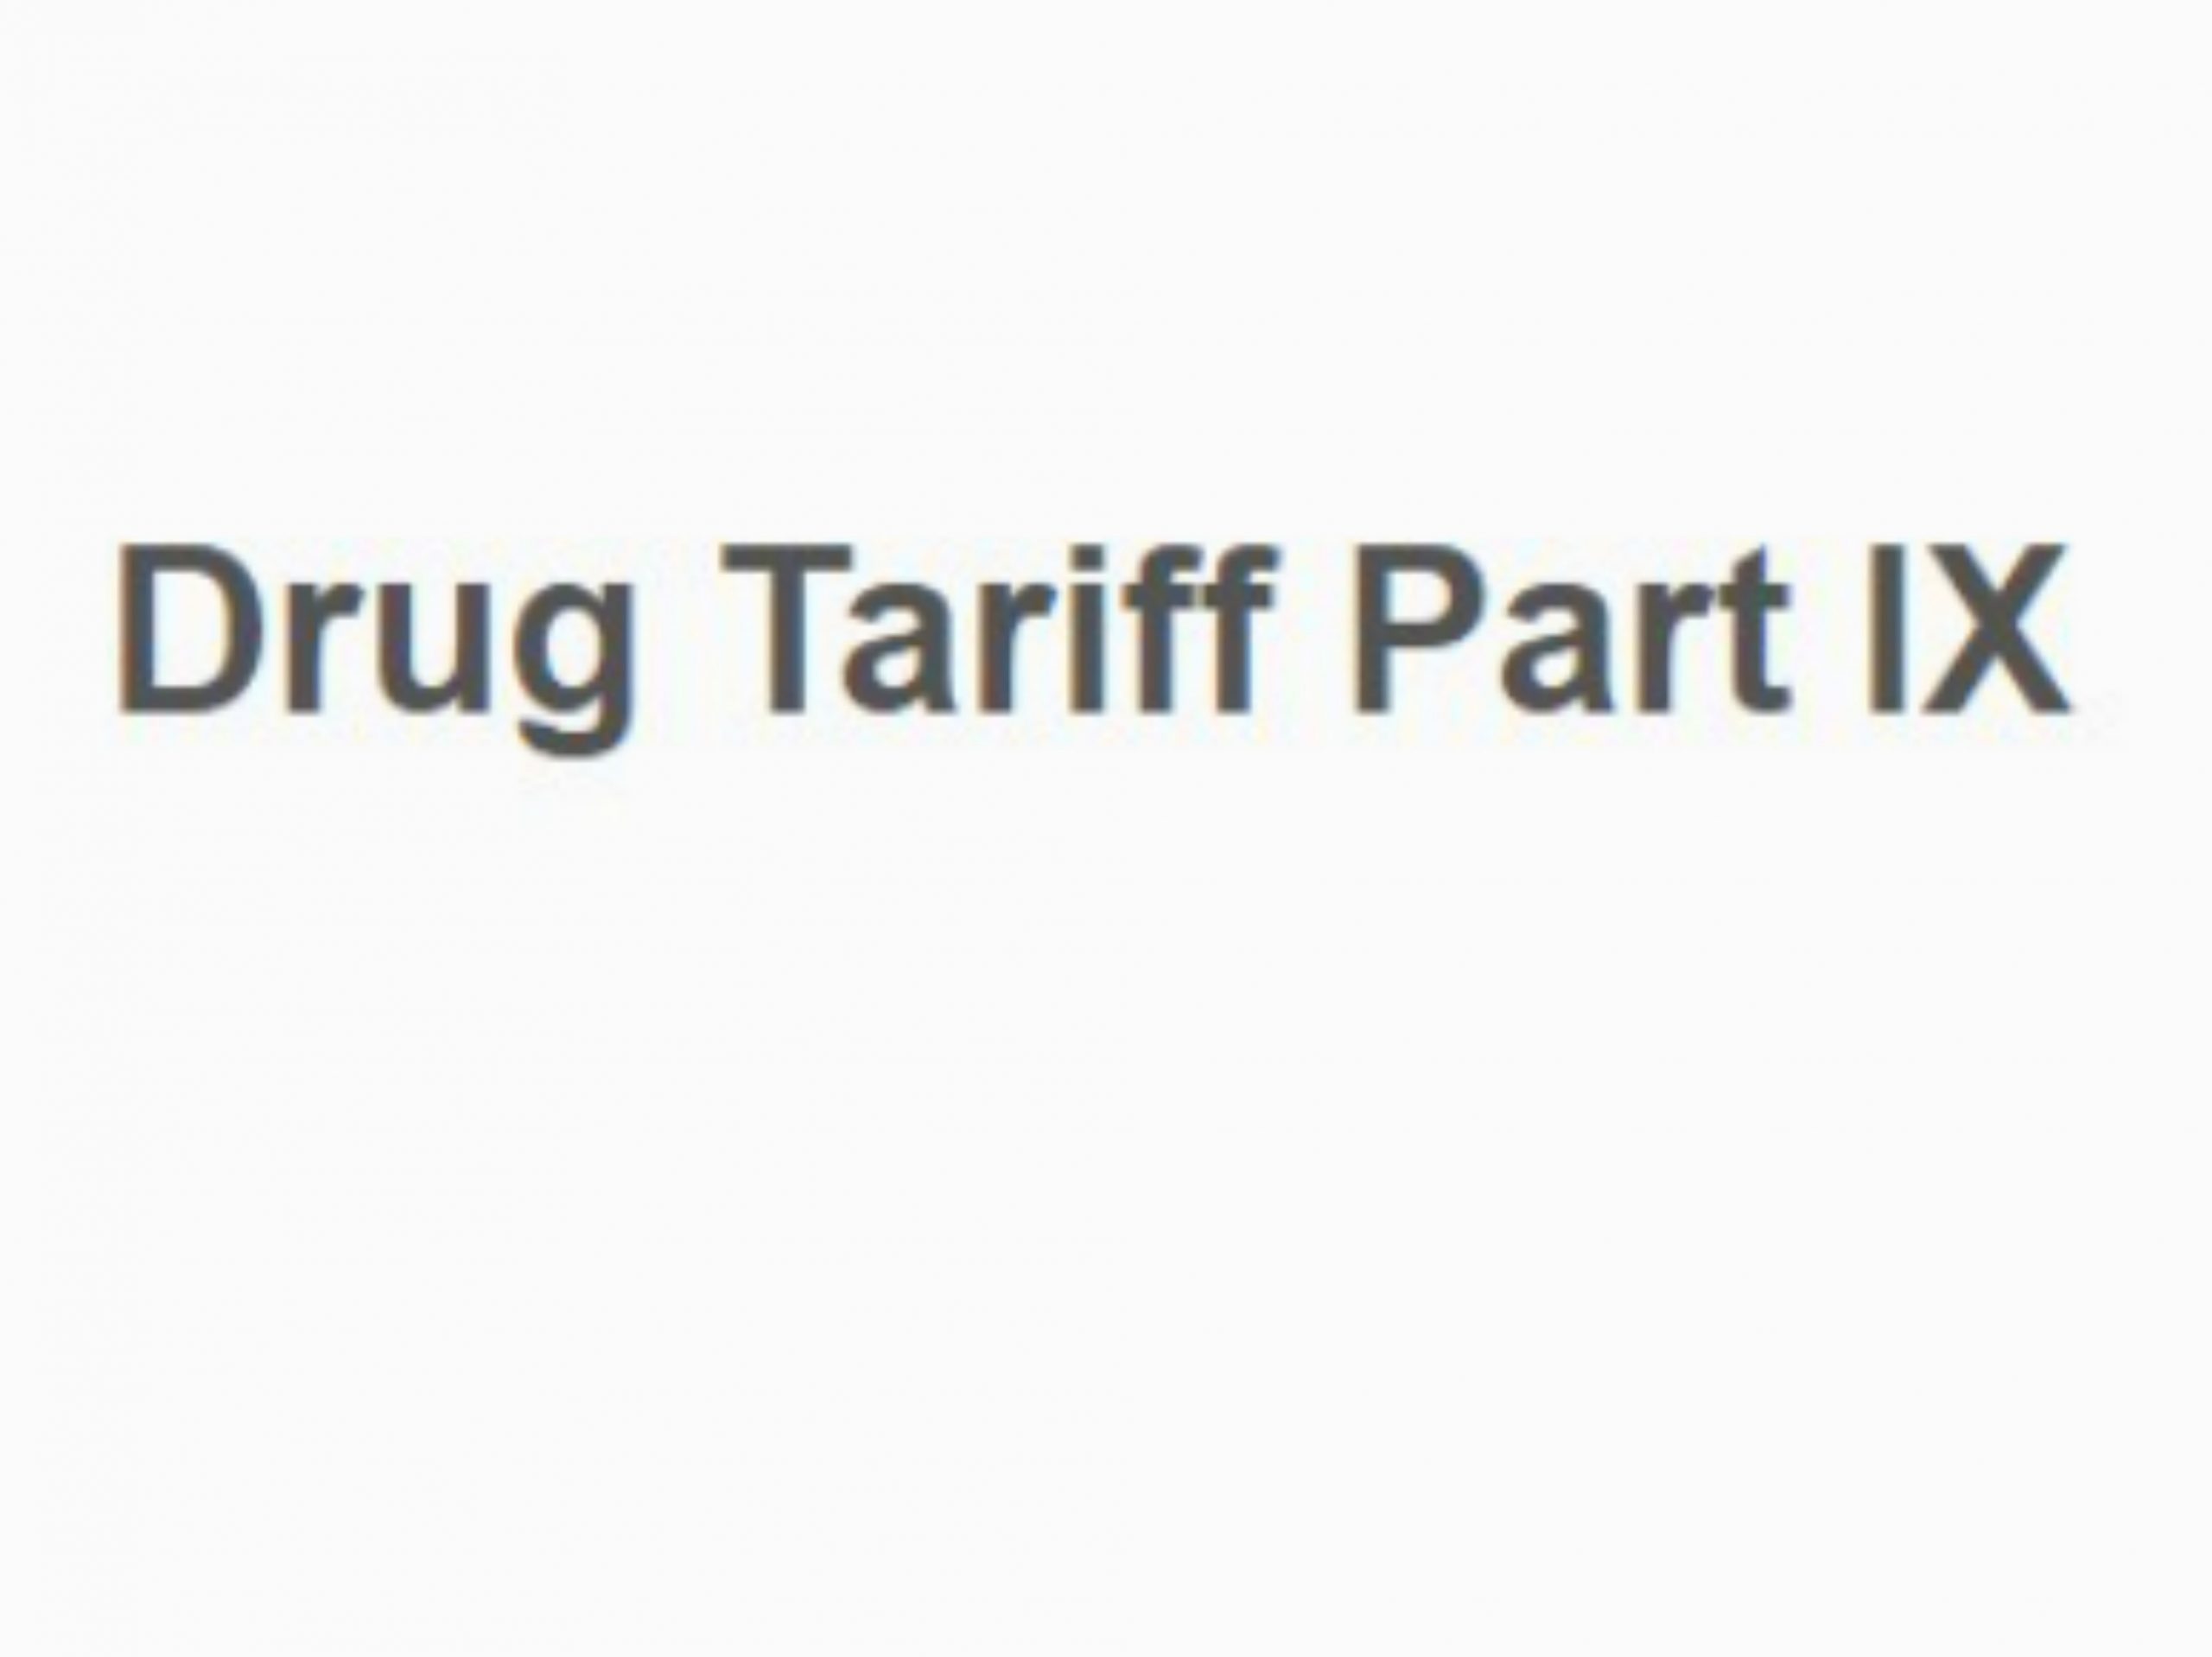 Part IX Industry Drug Tariff Committee Members and Representatives